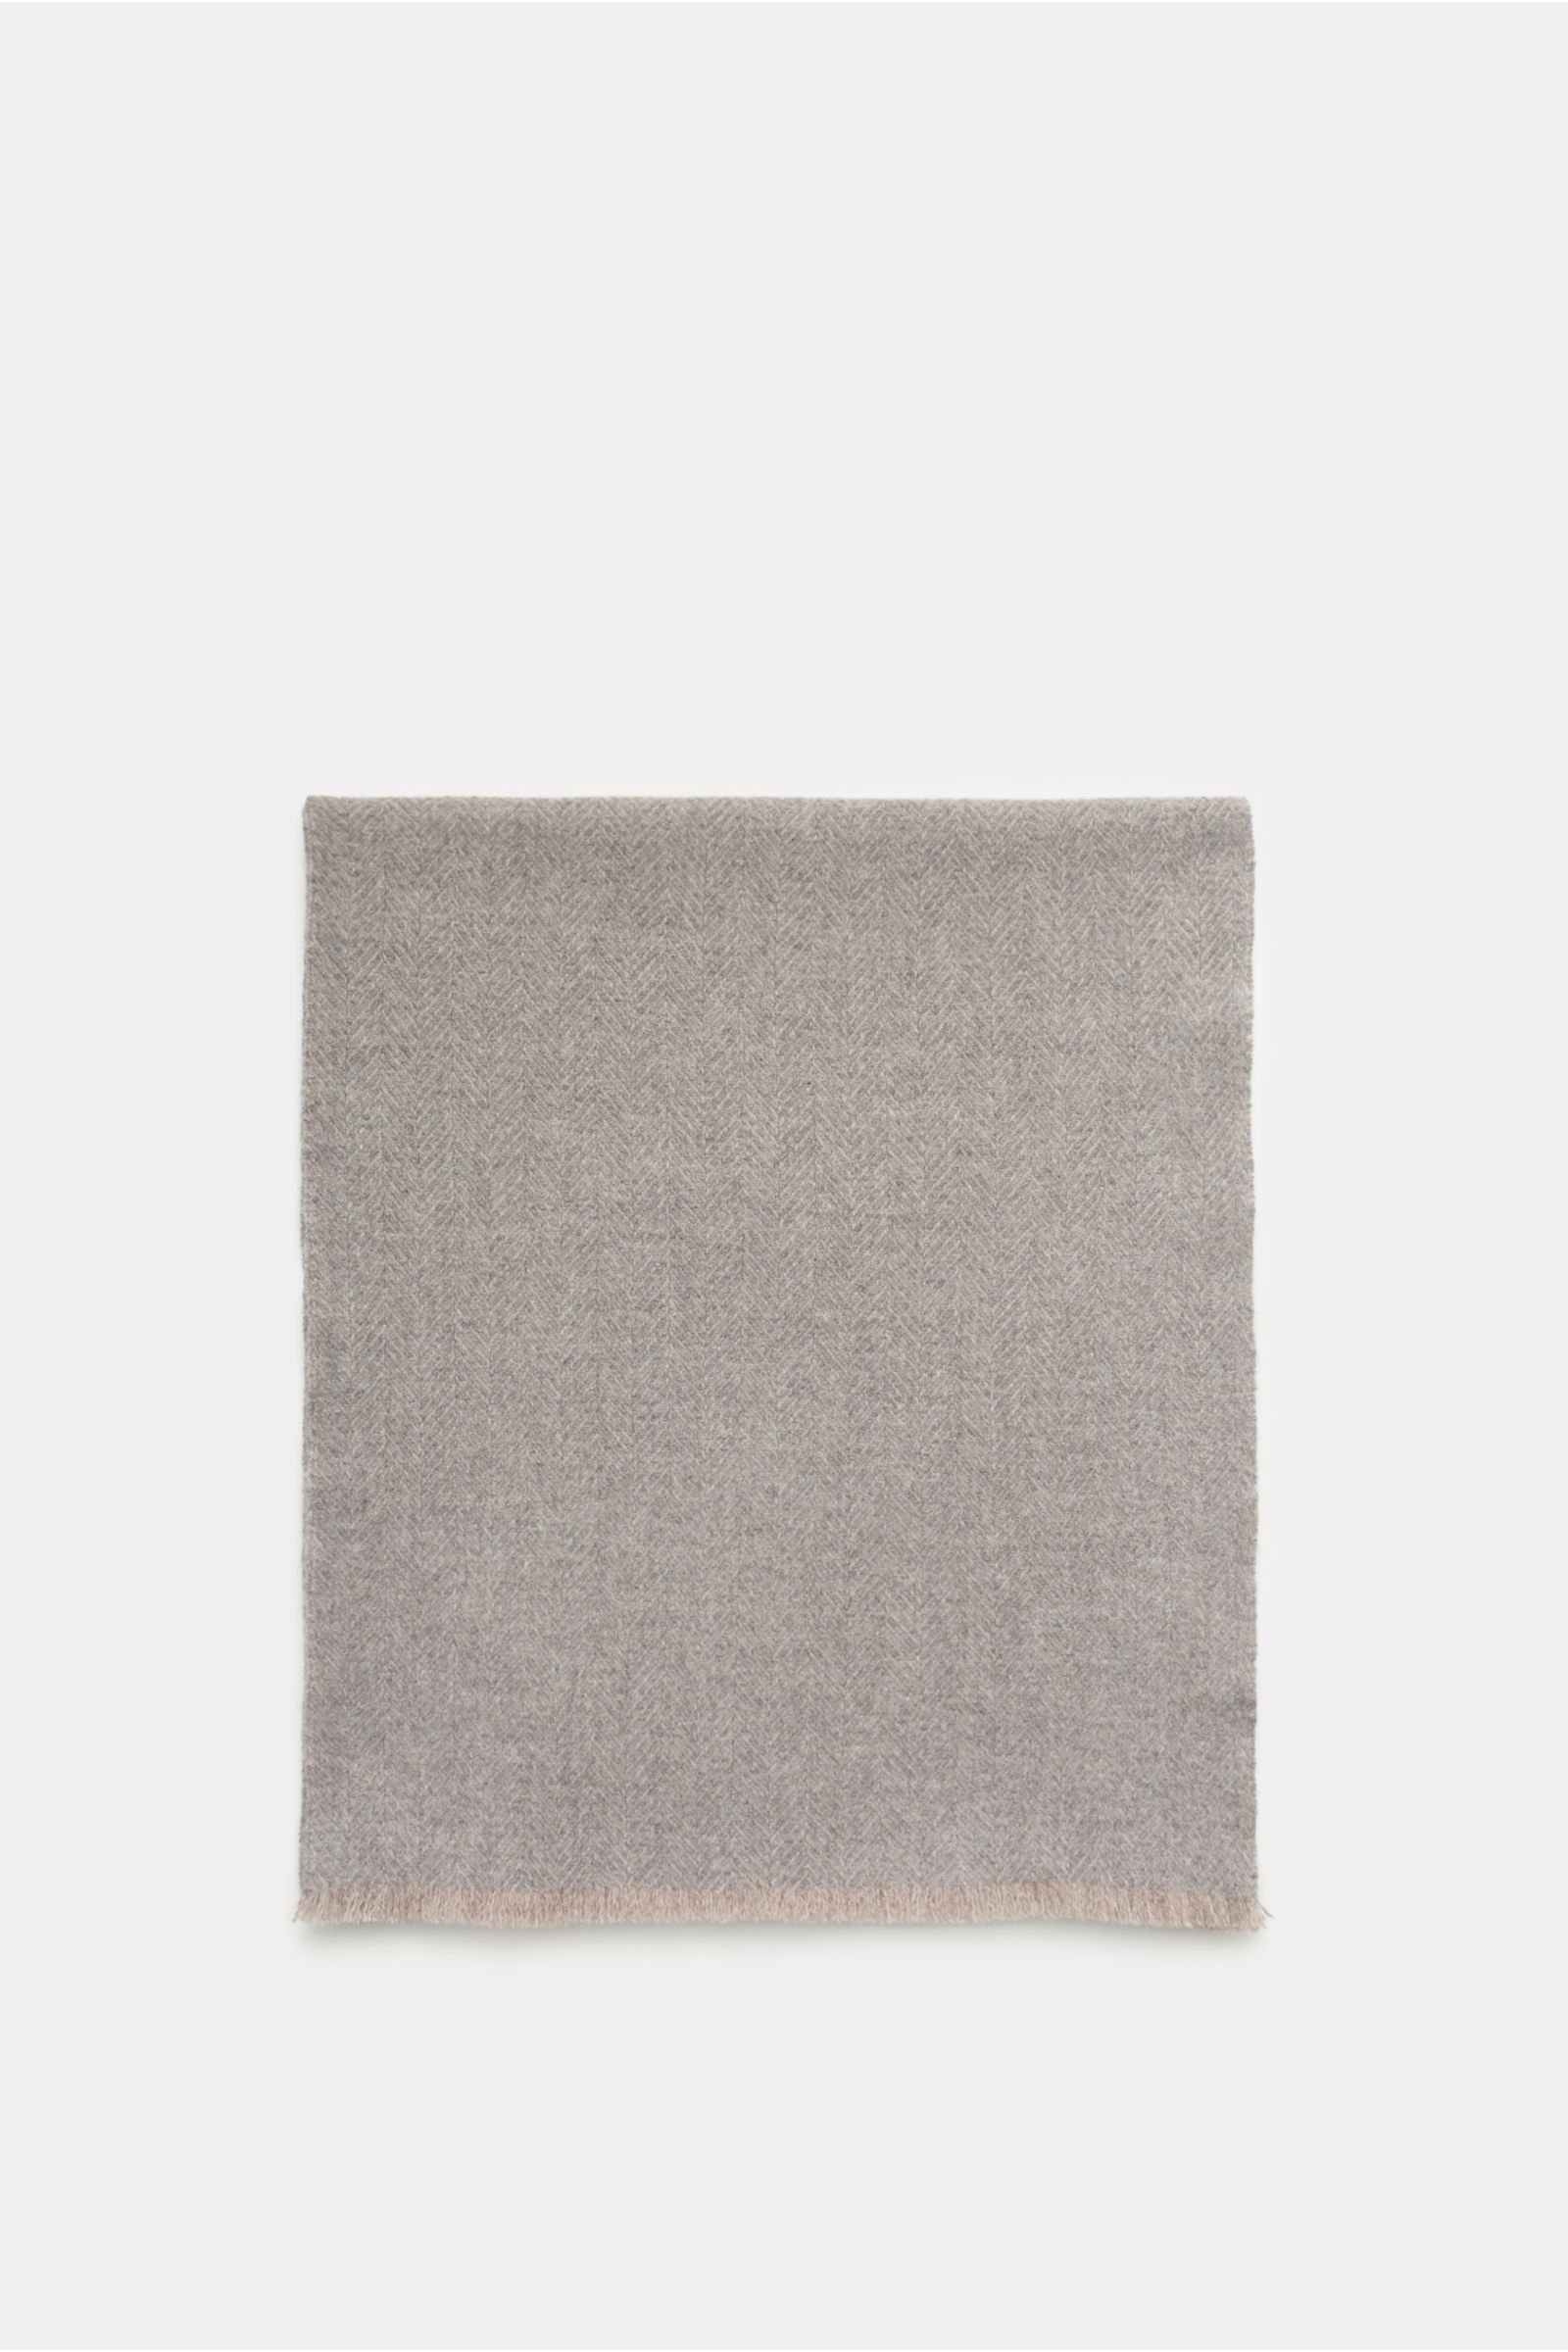 Cashmere scarf light grey/beige